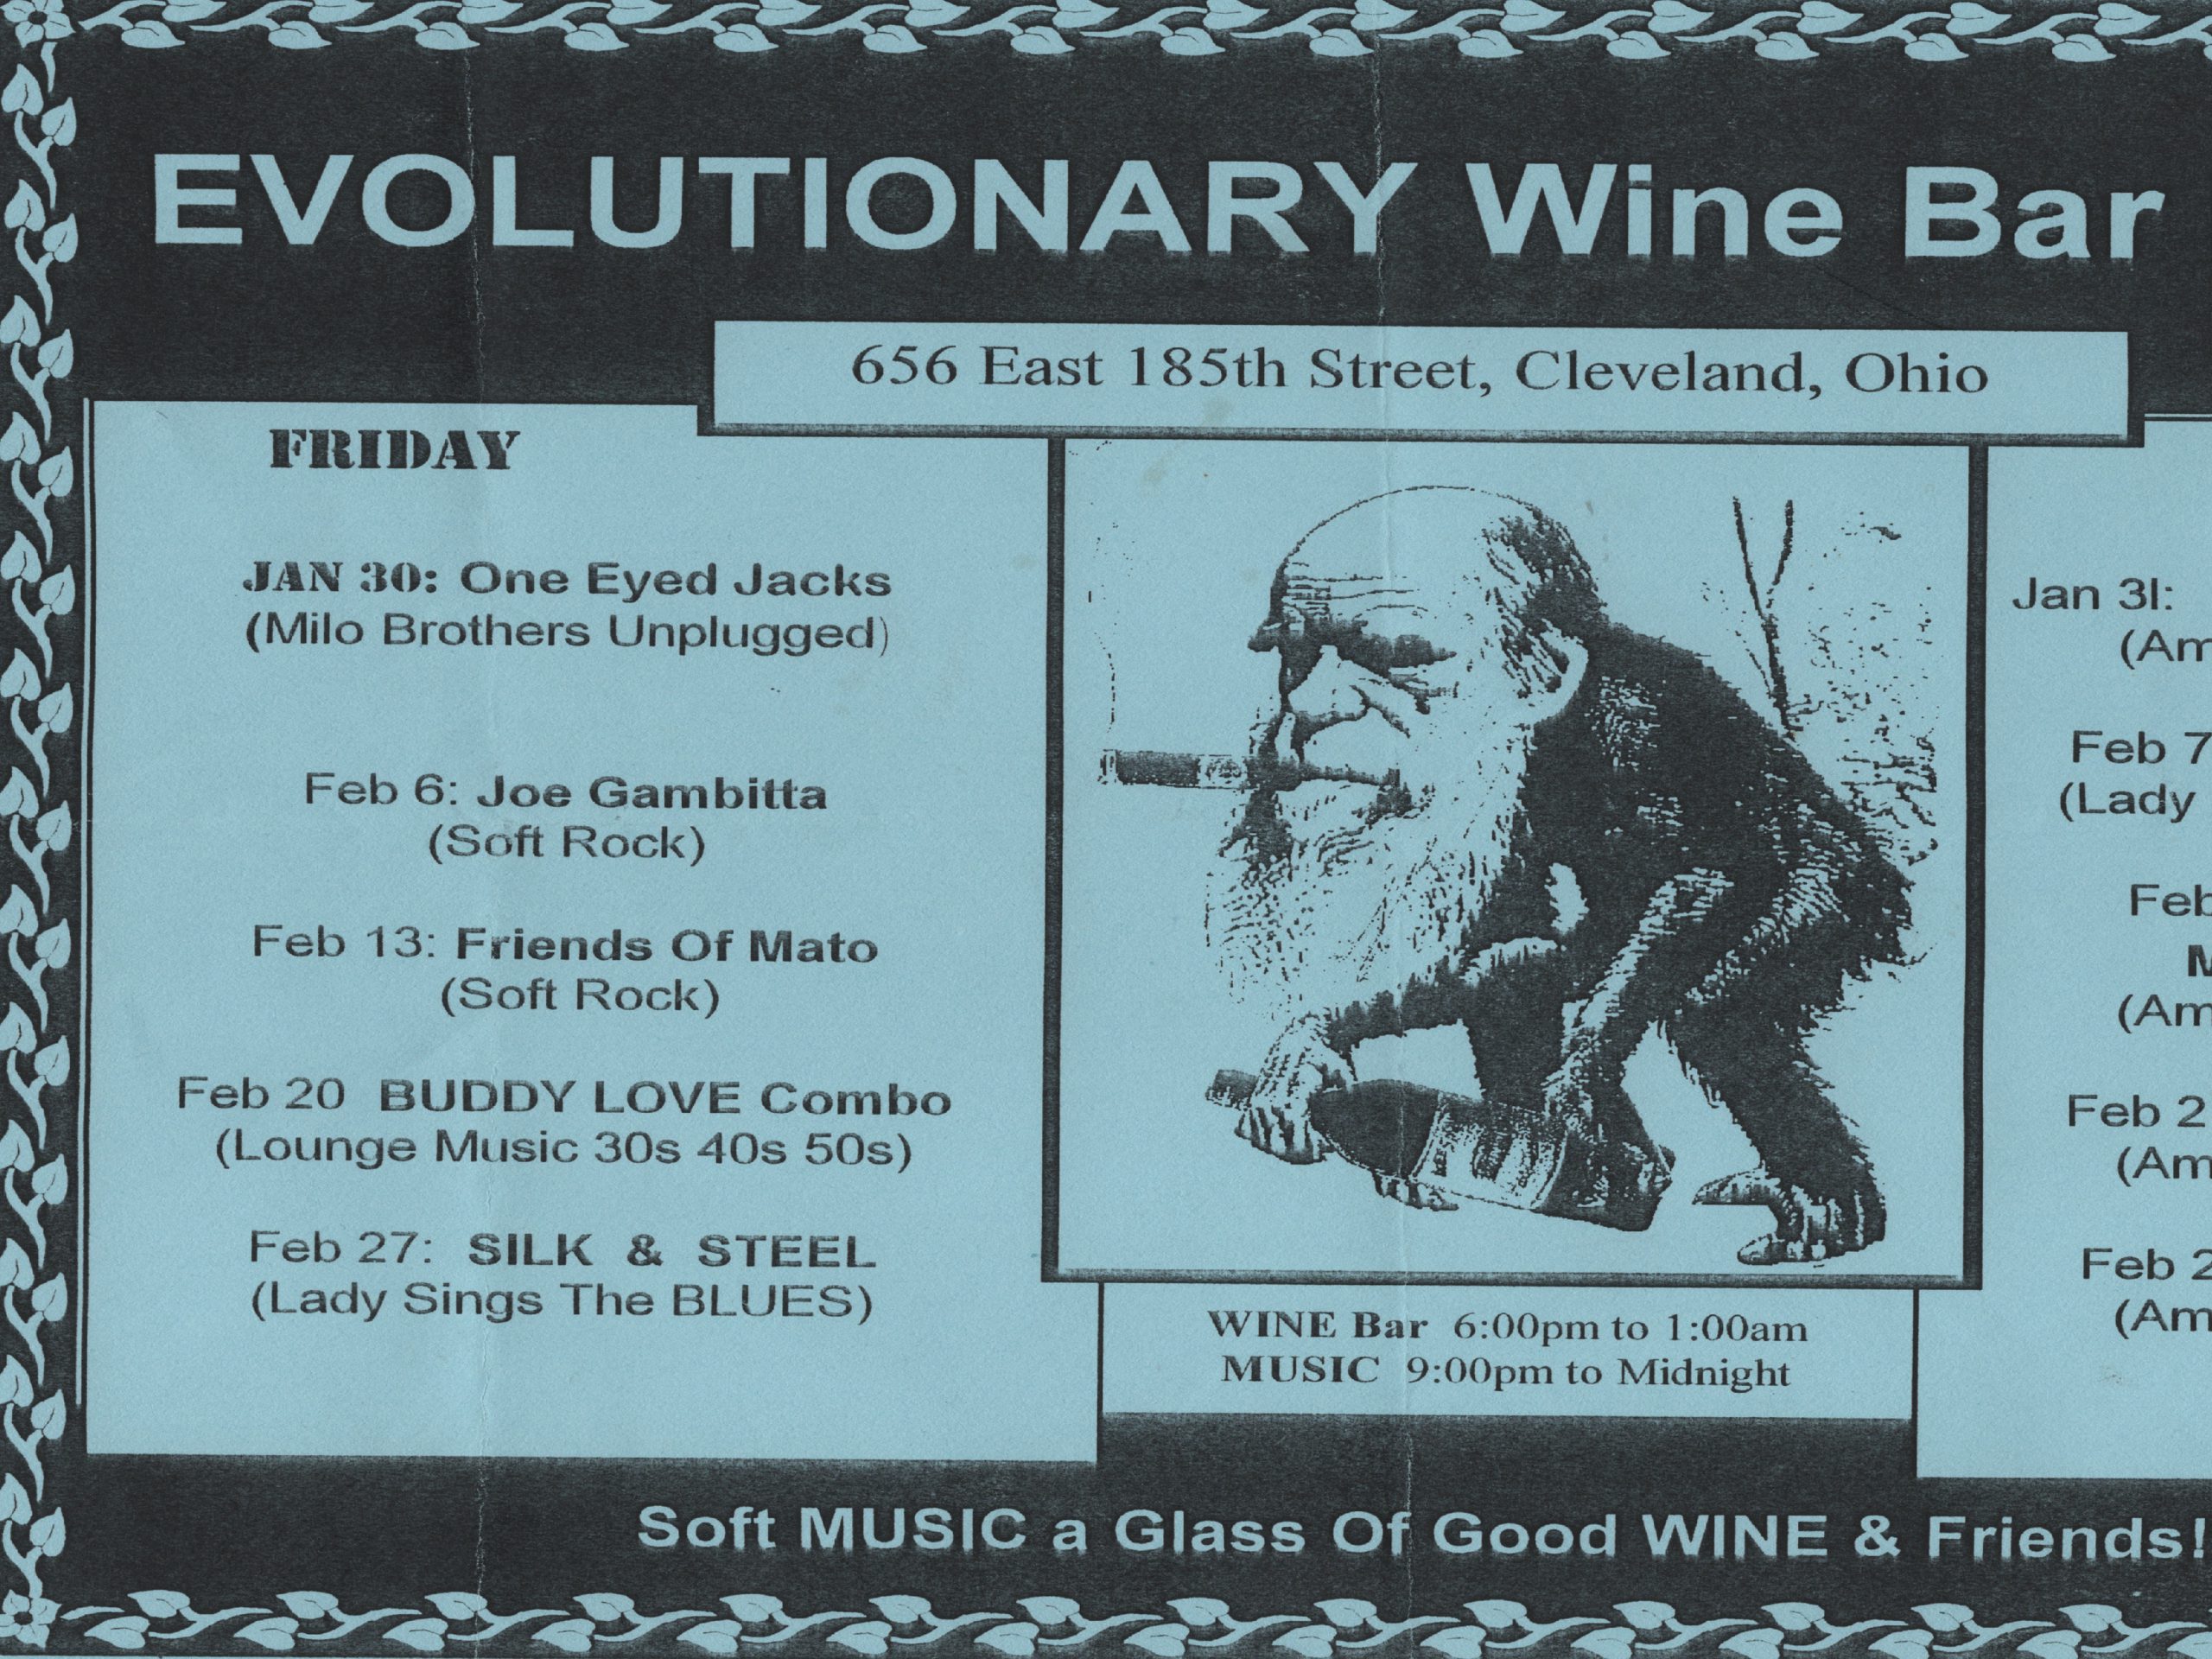 Buddy Love Combo at Evolutionary Wine Bar in 1998